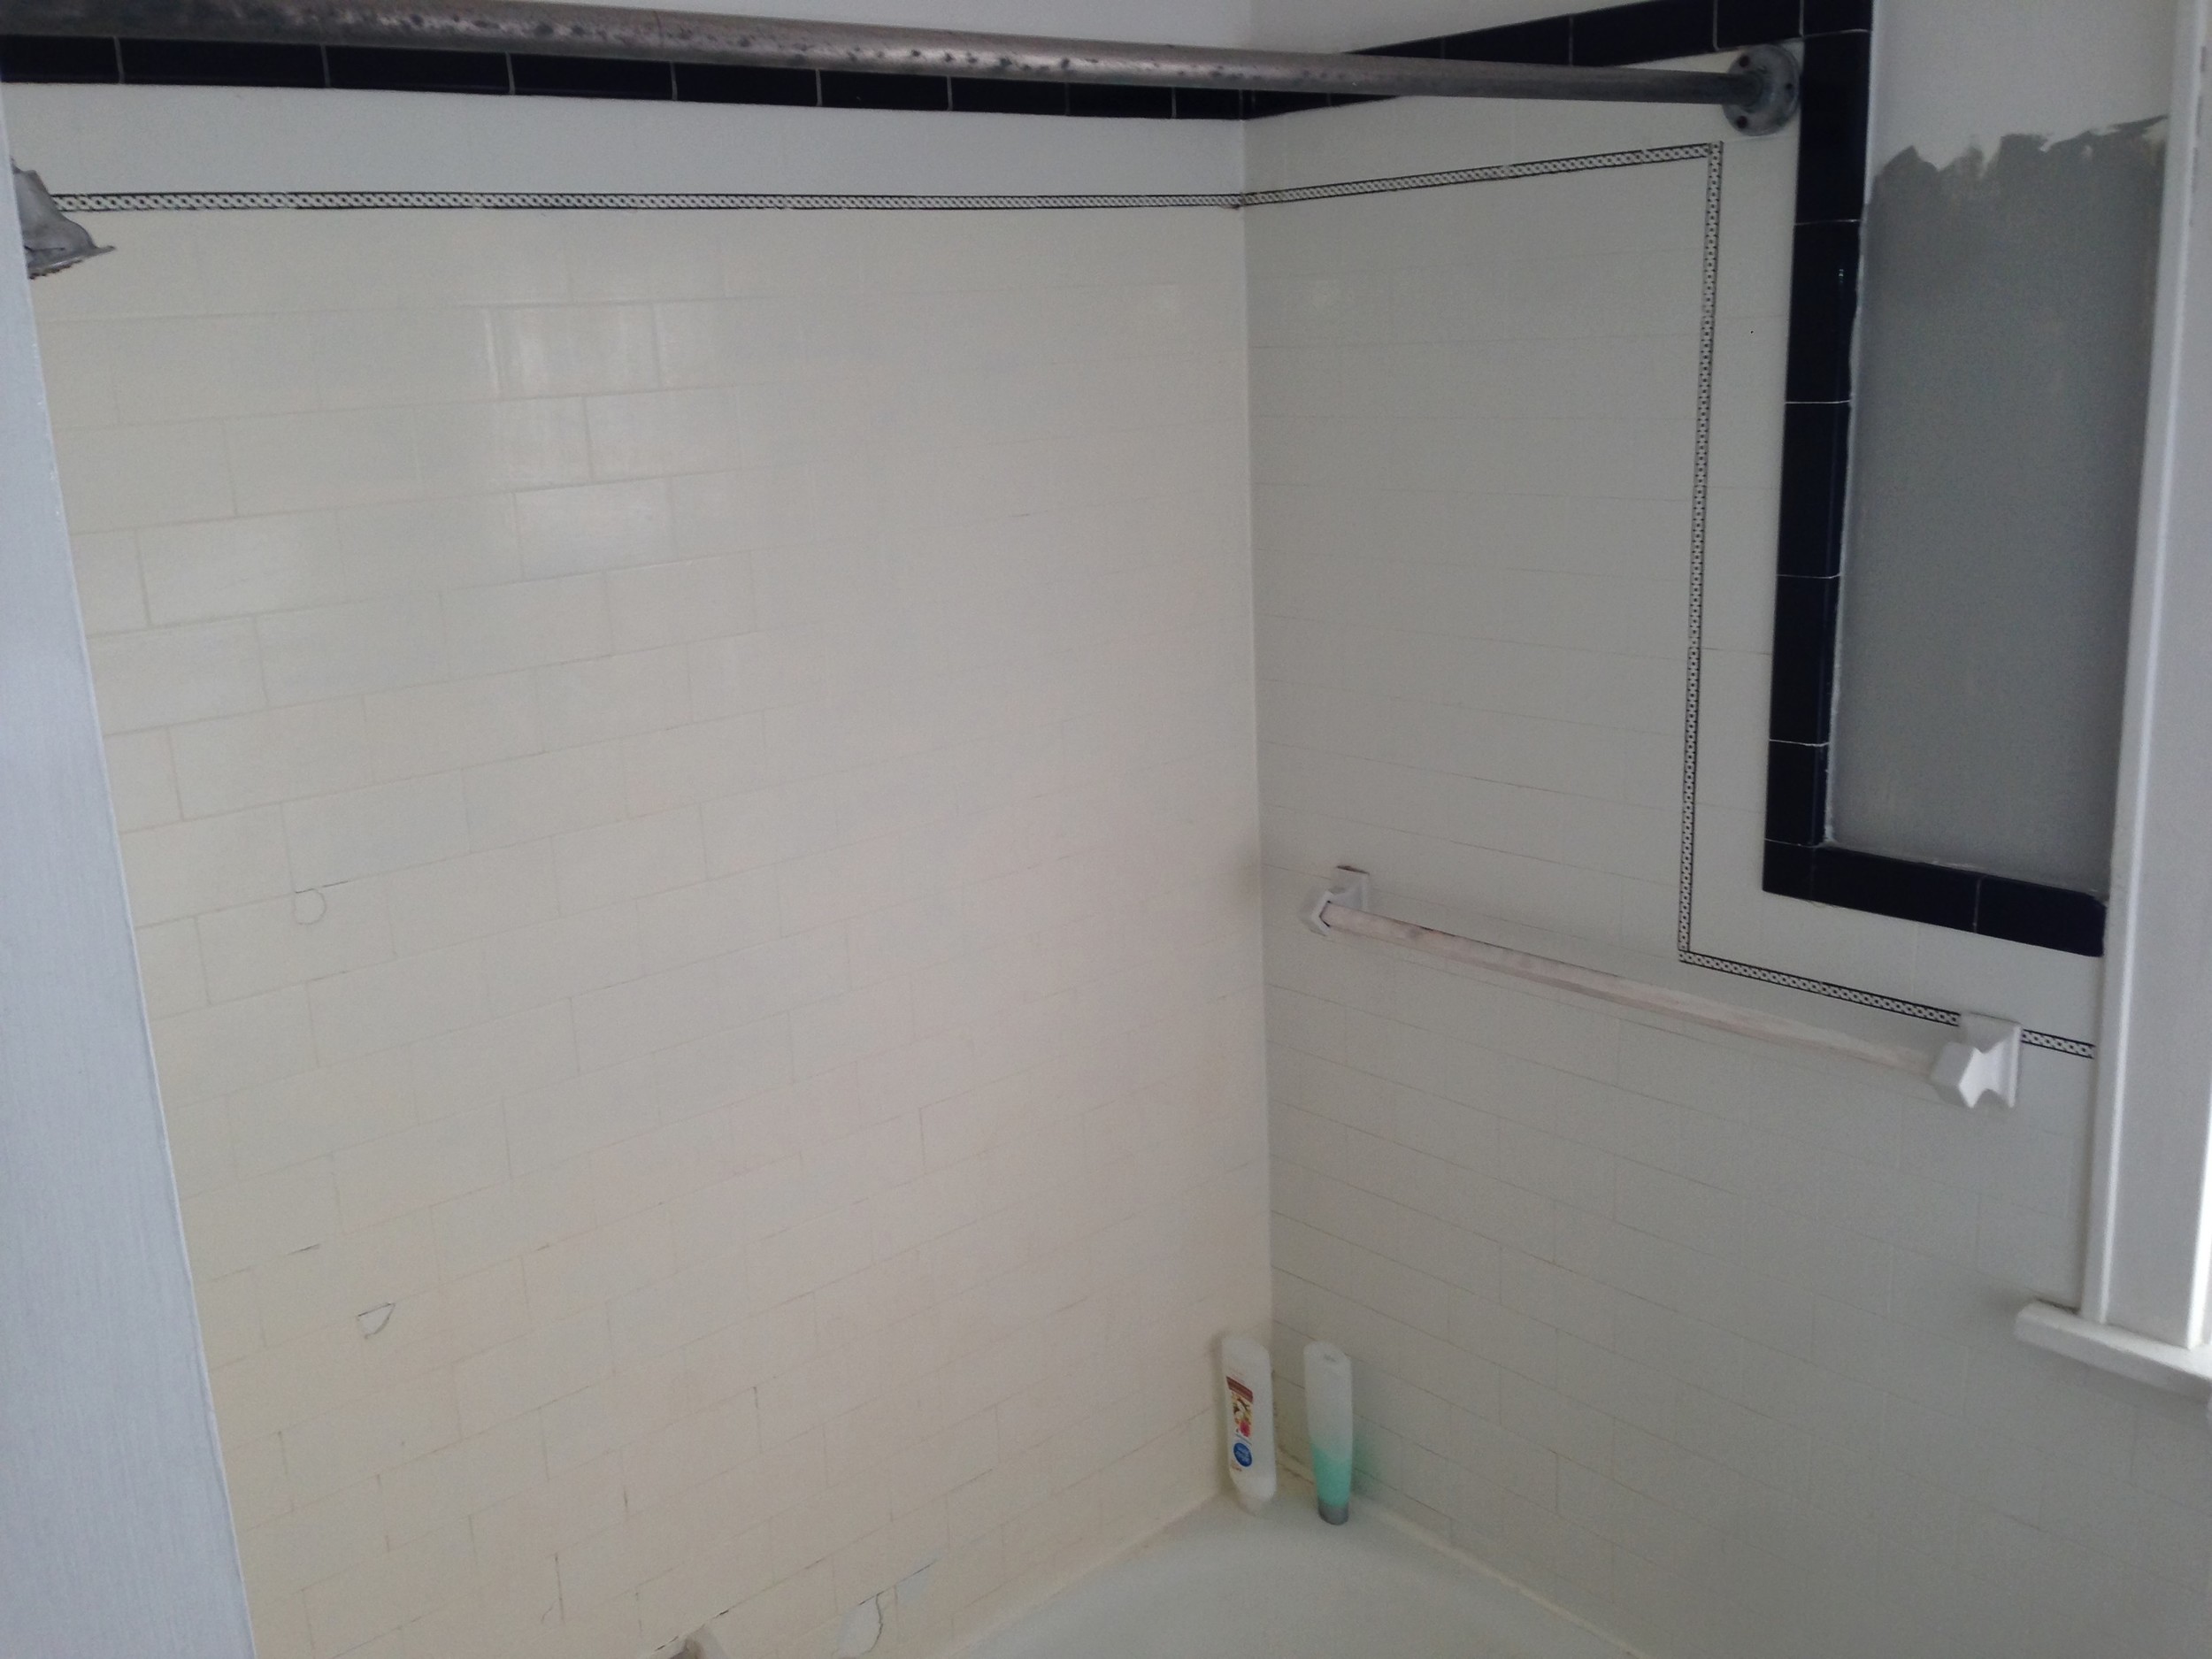 Remove Wall Tile Mortar And Wire Mesh, Bathroom Tile Edge Trim